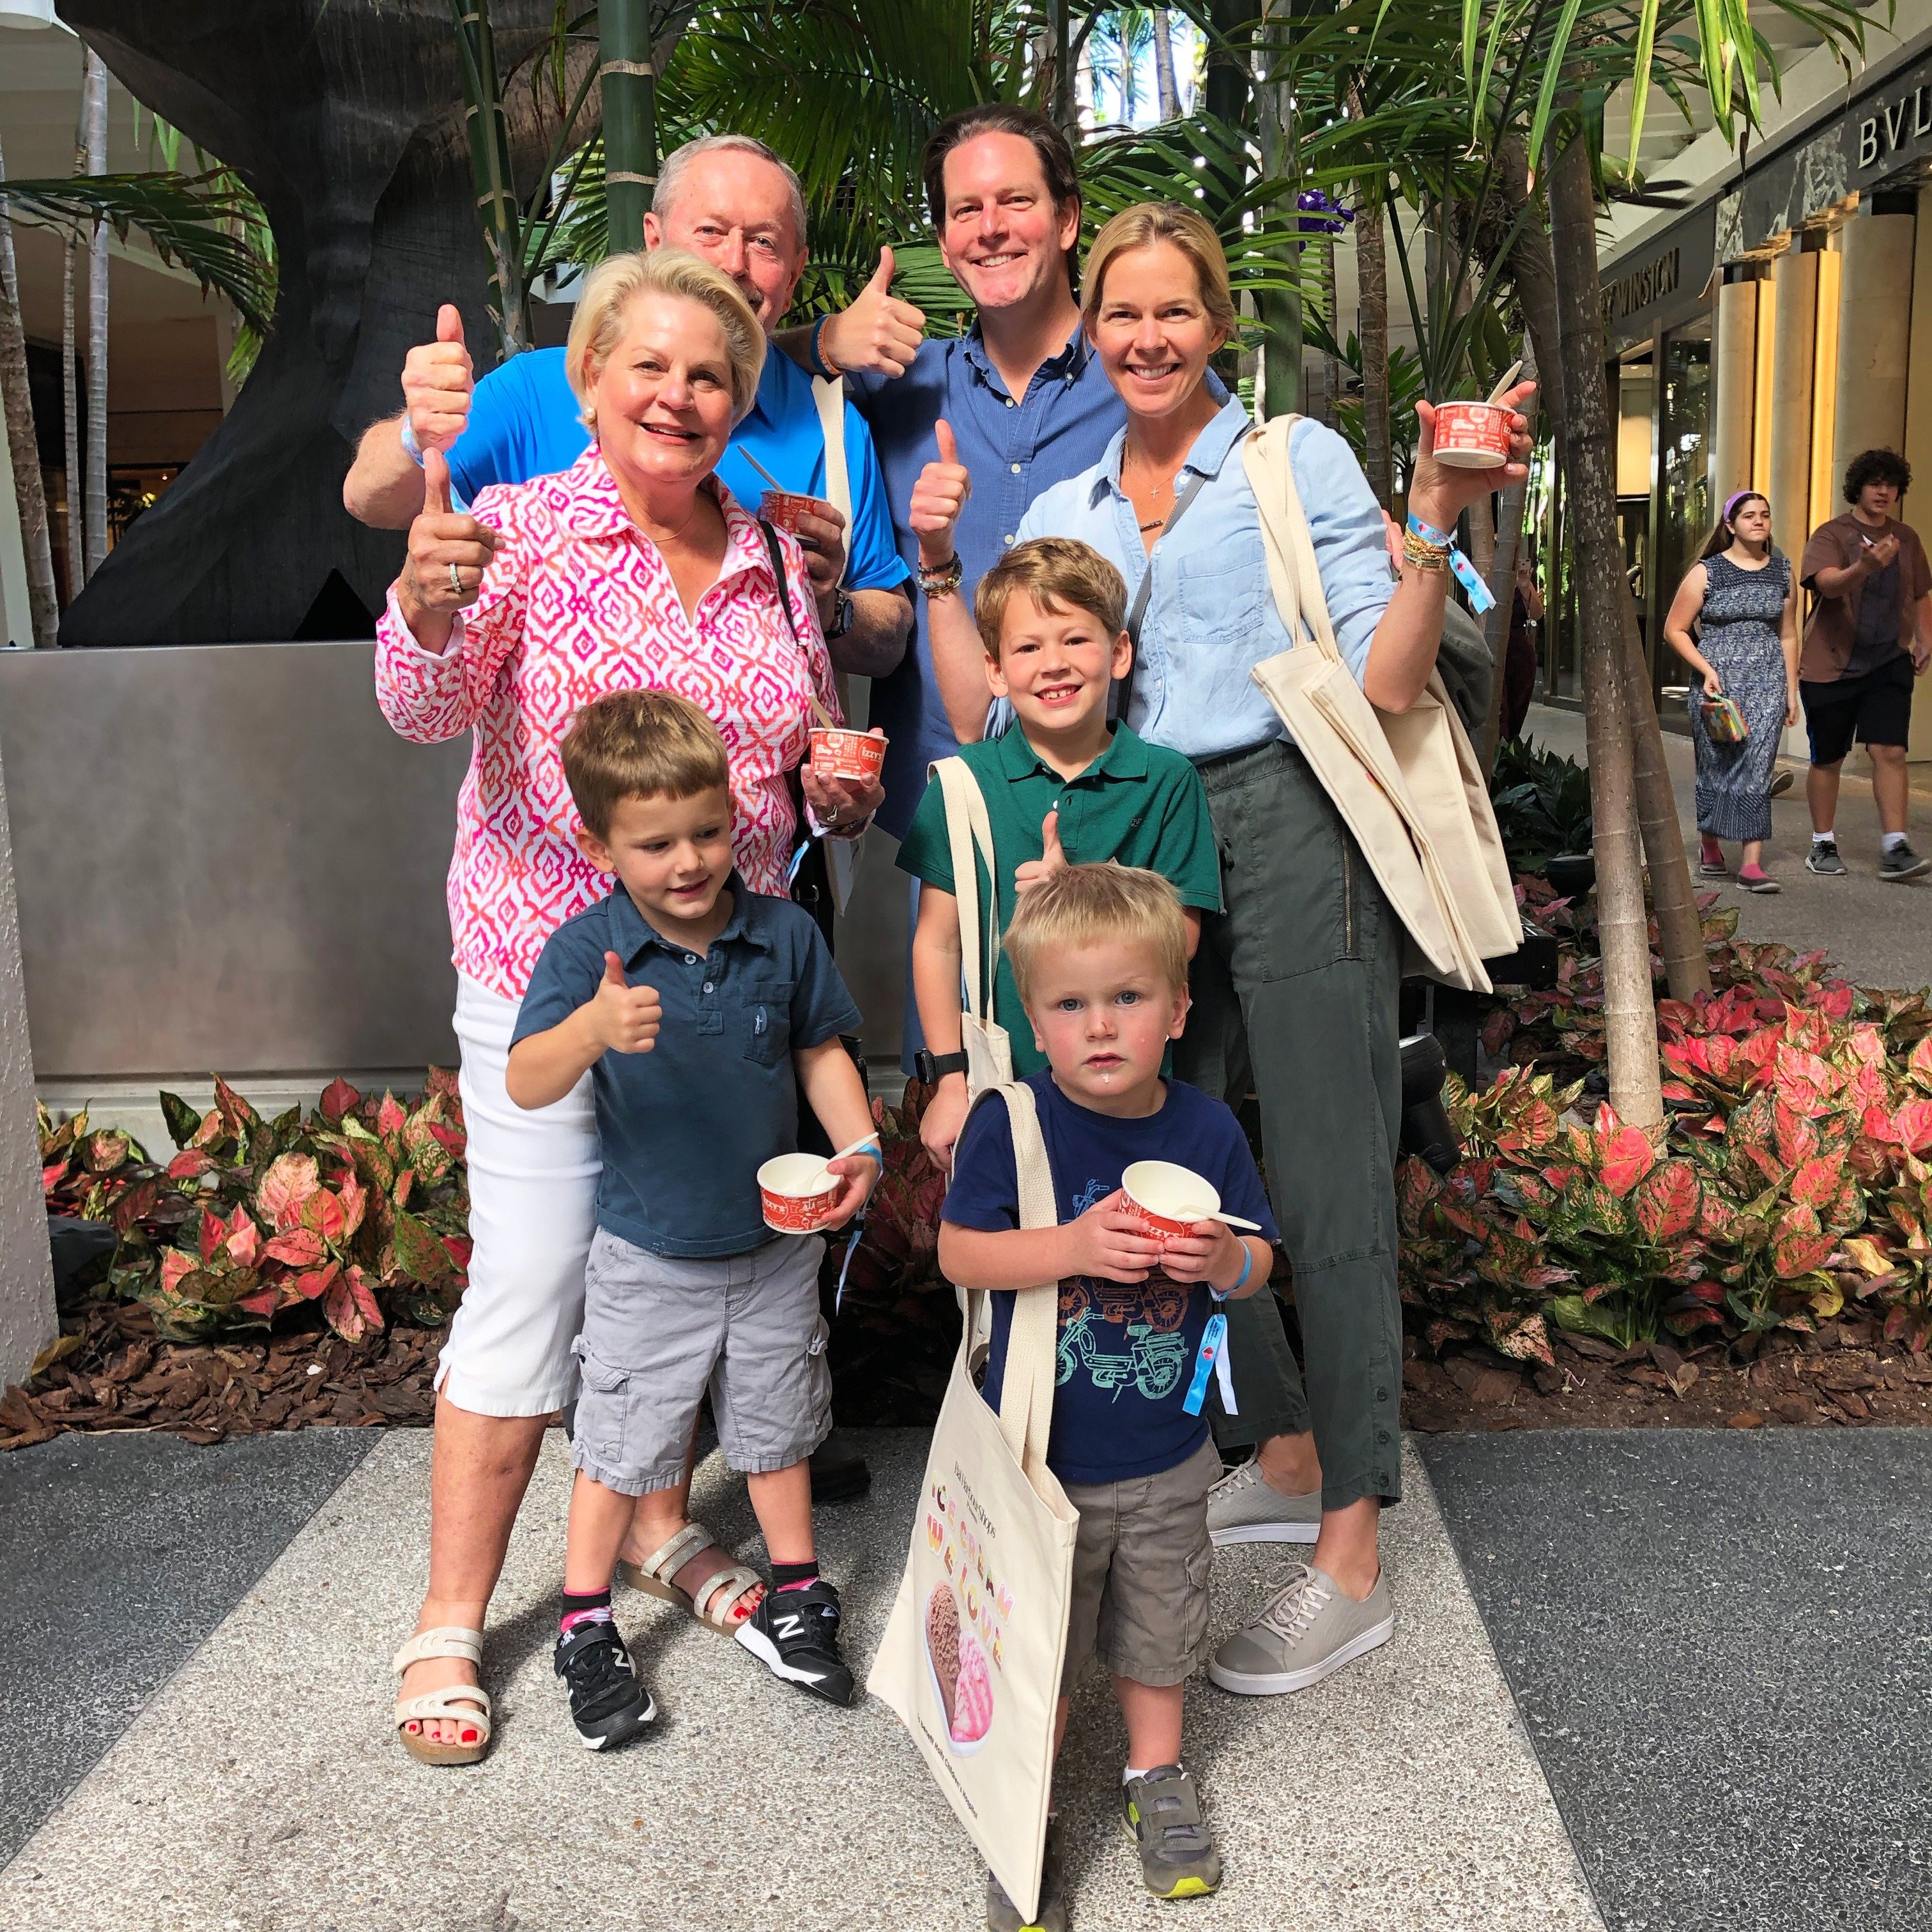 Whitman Lazenby family enjoying ice cream at Ice Cream We Love 2019